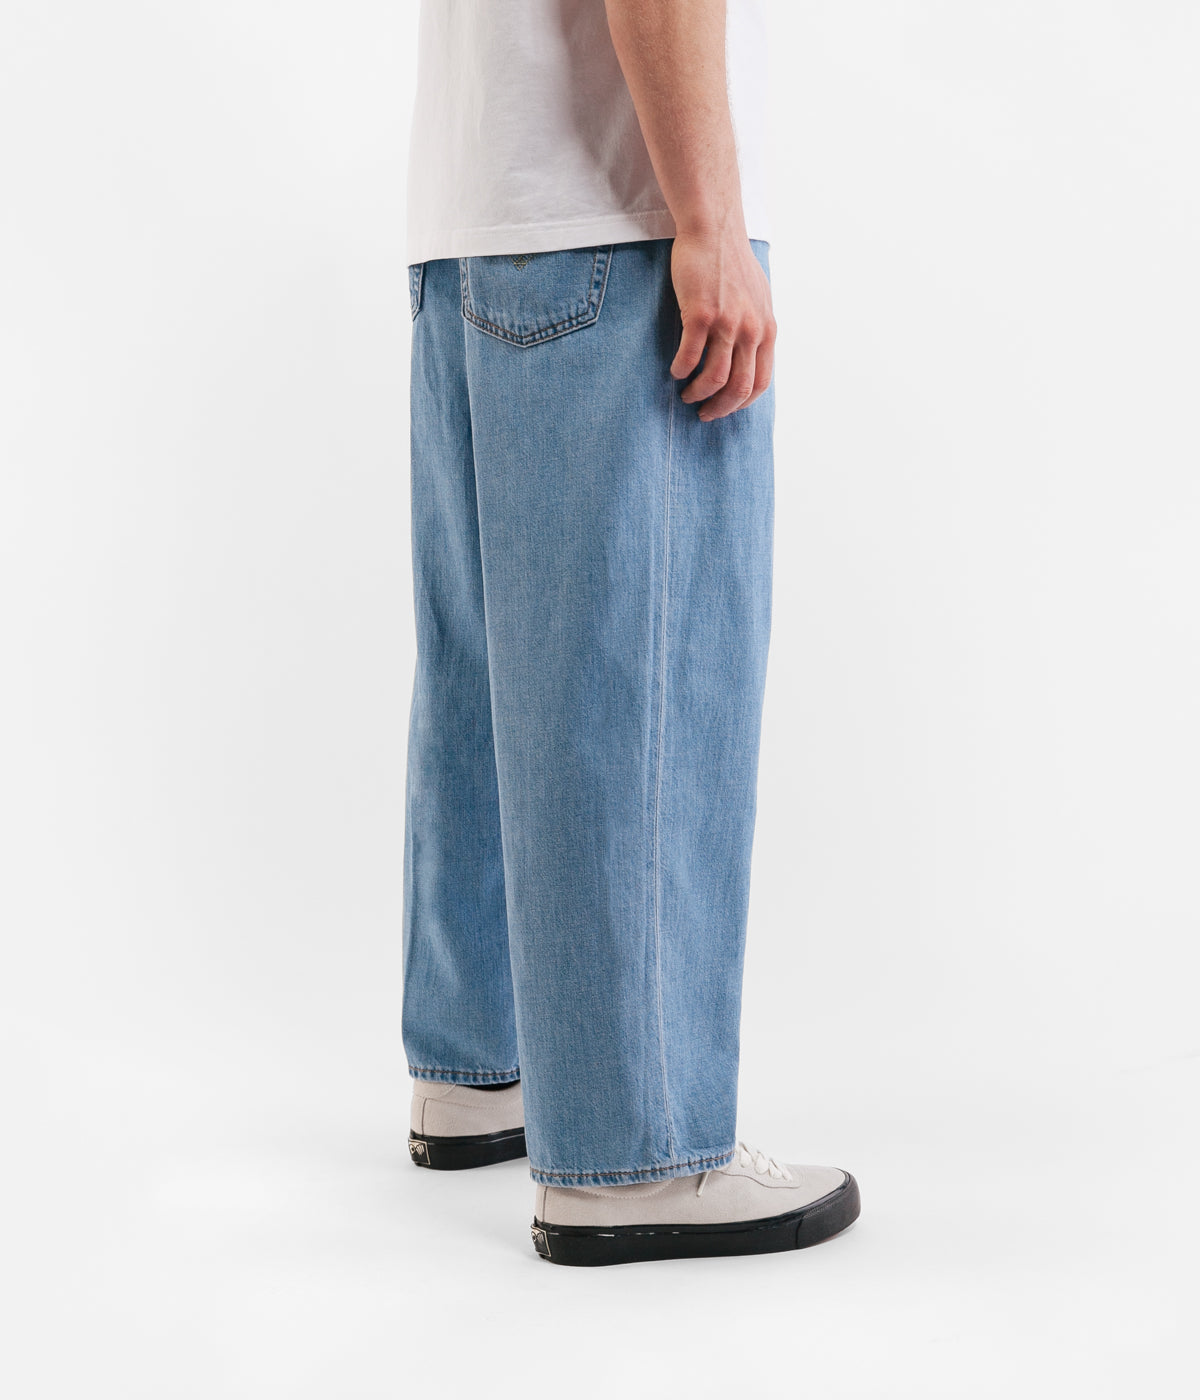 levis white crop jeans